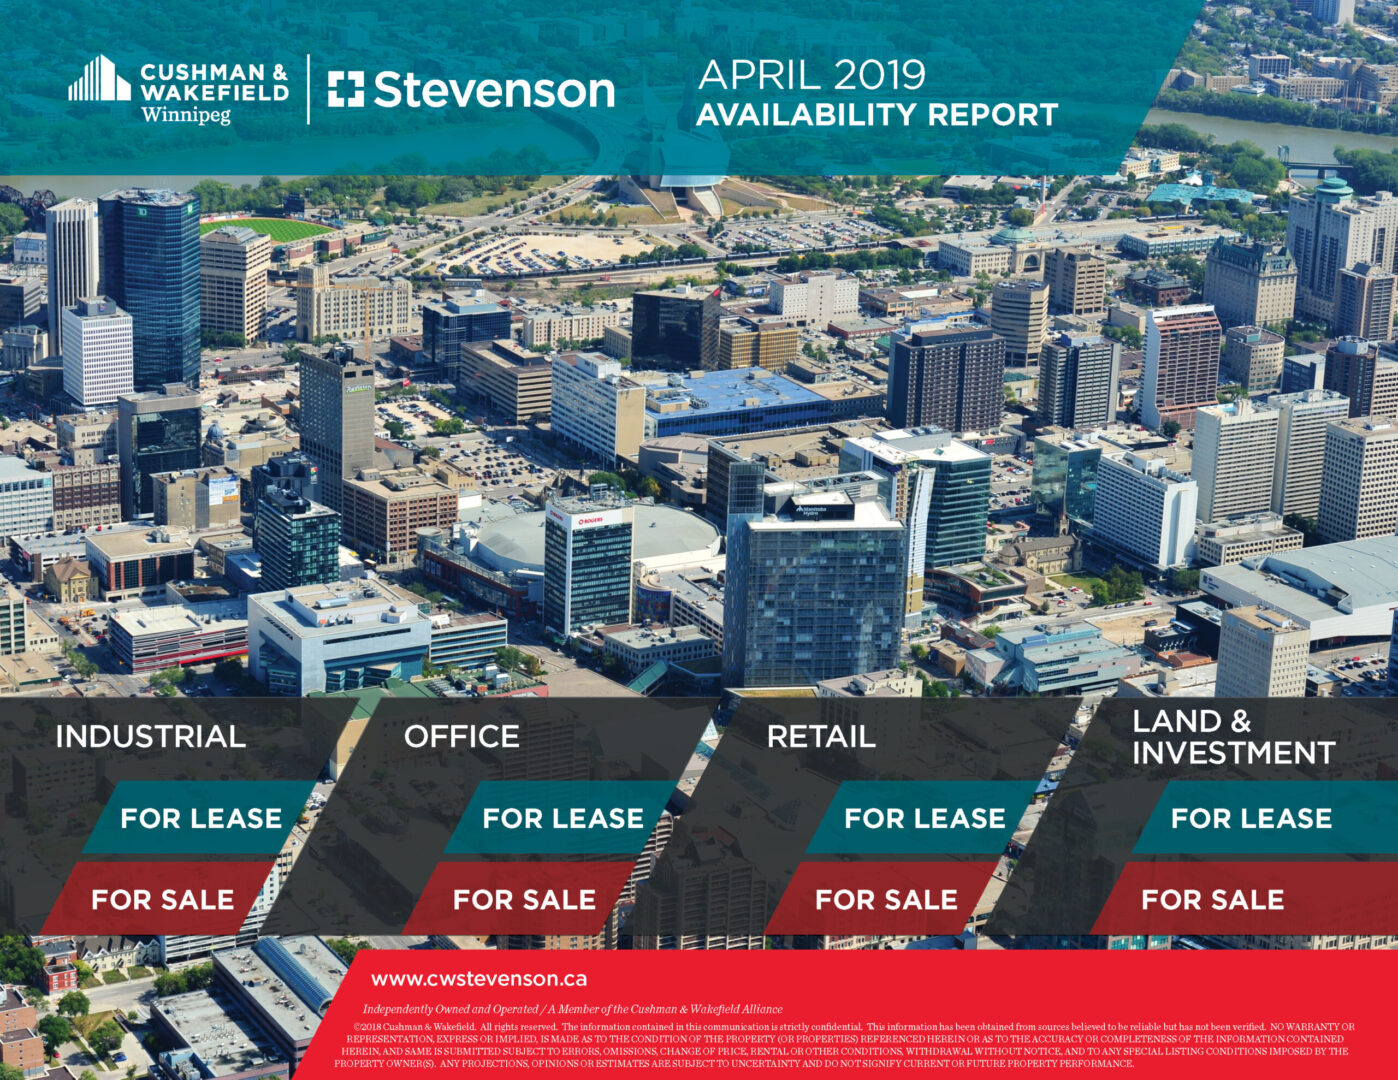 April 2019 availability report in winnipeg, cws cushman wakefield Stevenson